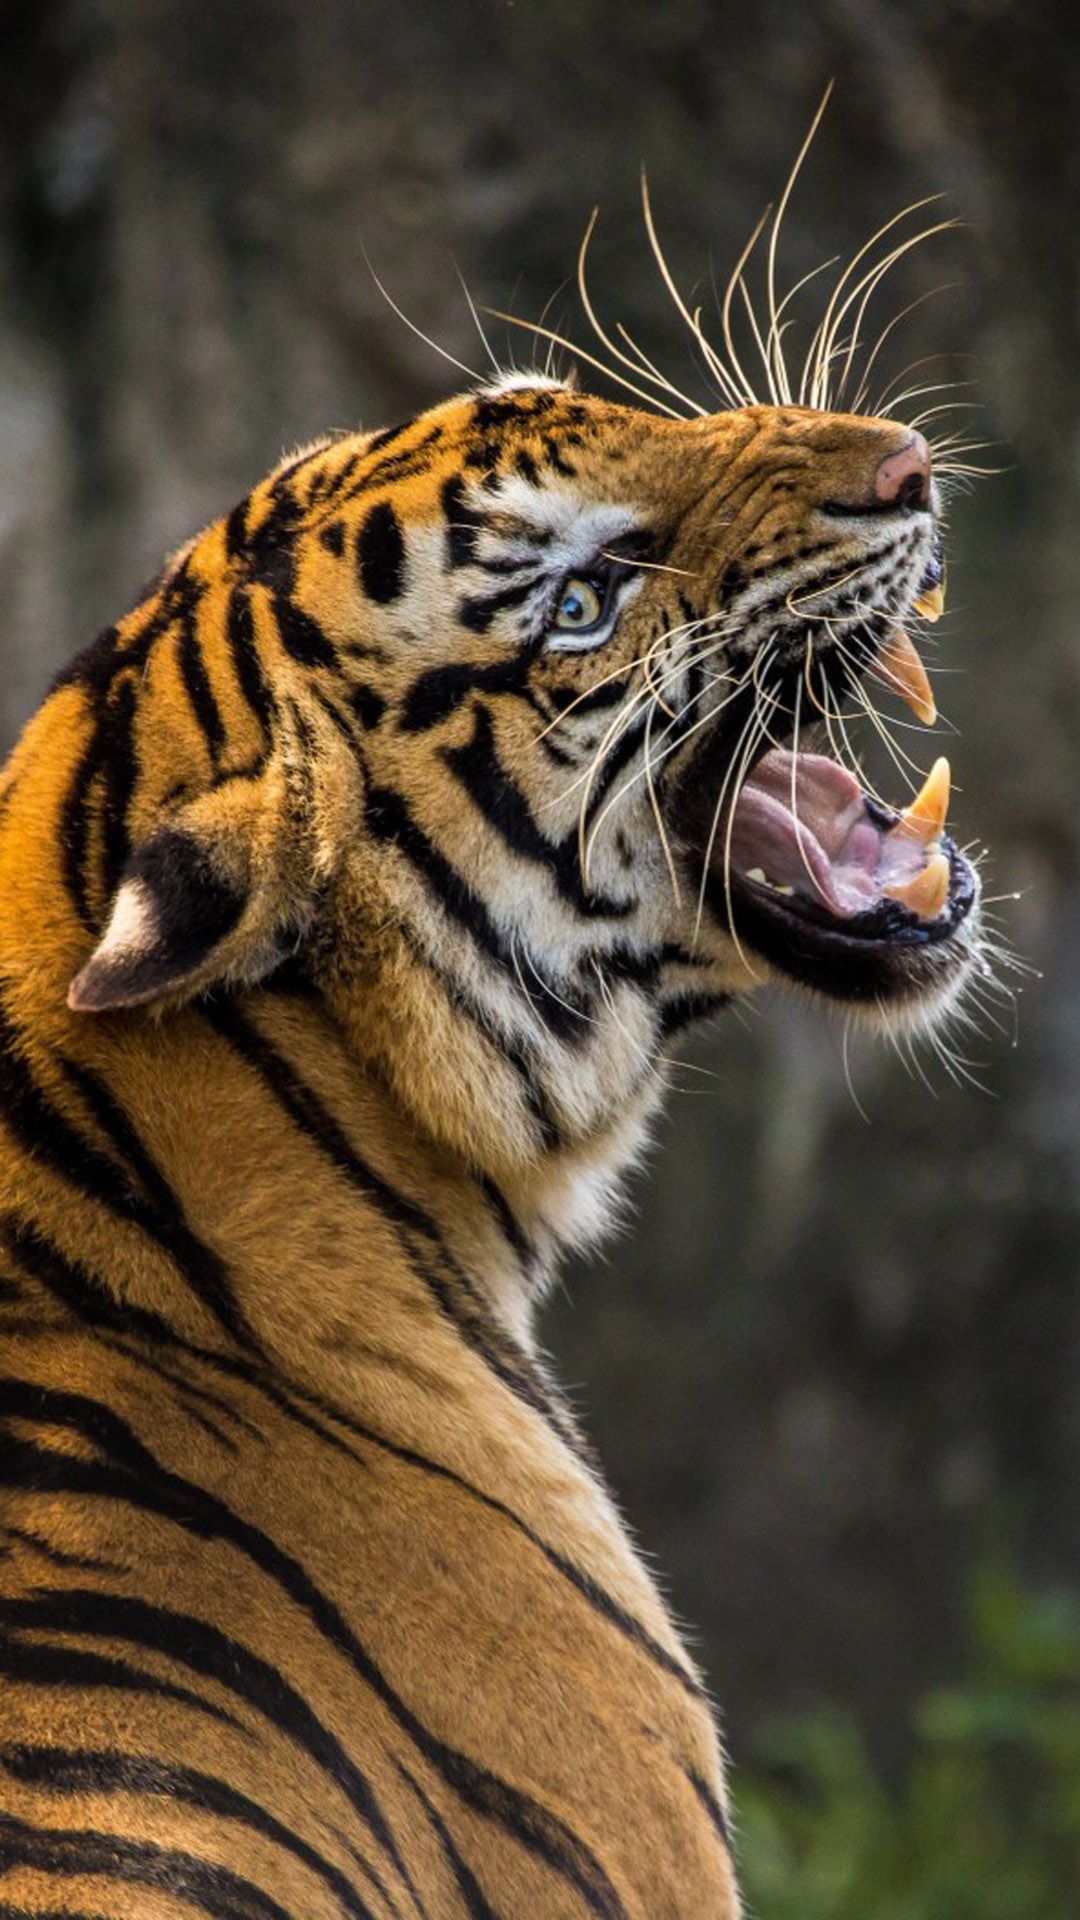 Roaring Tiger 4K Ultra HD Mobile Wallpaper. Tiger wallpaper, Tiger picture, Tiger